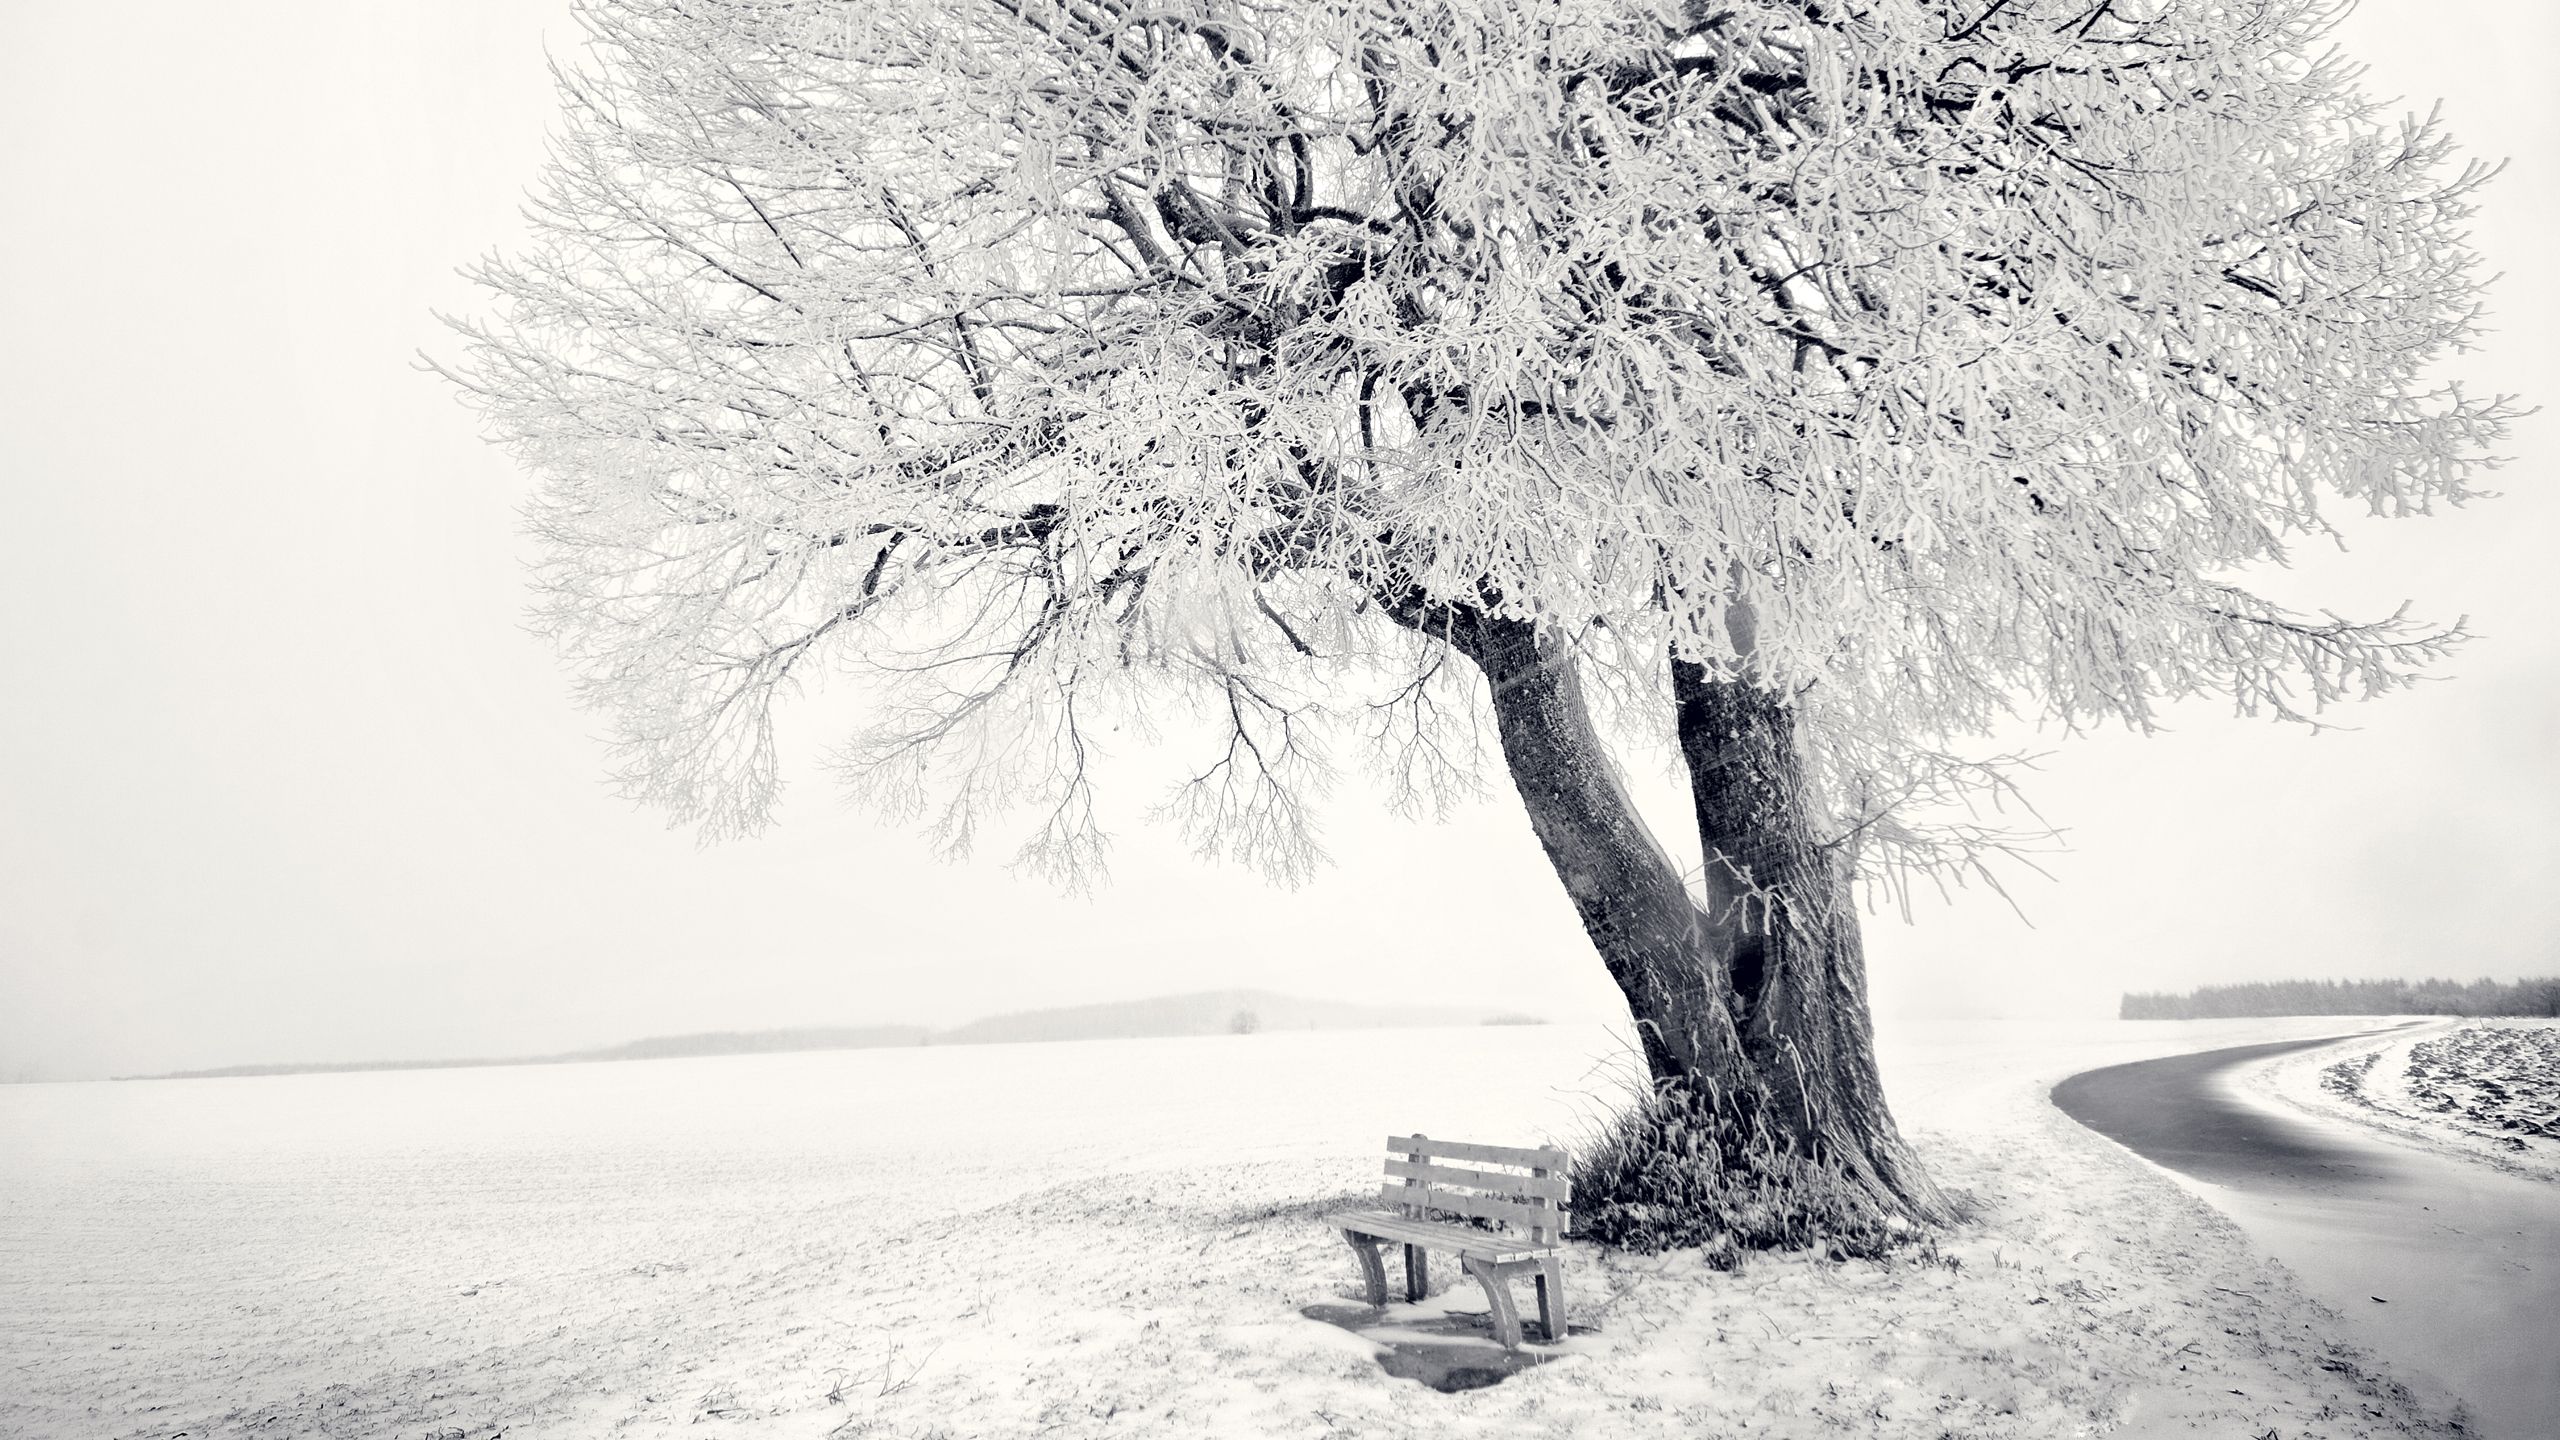 Snow Winter Scene Wallpaper 2560x1440 ID22858